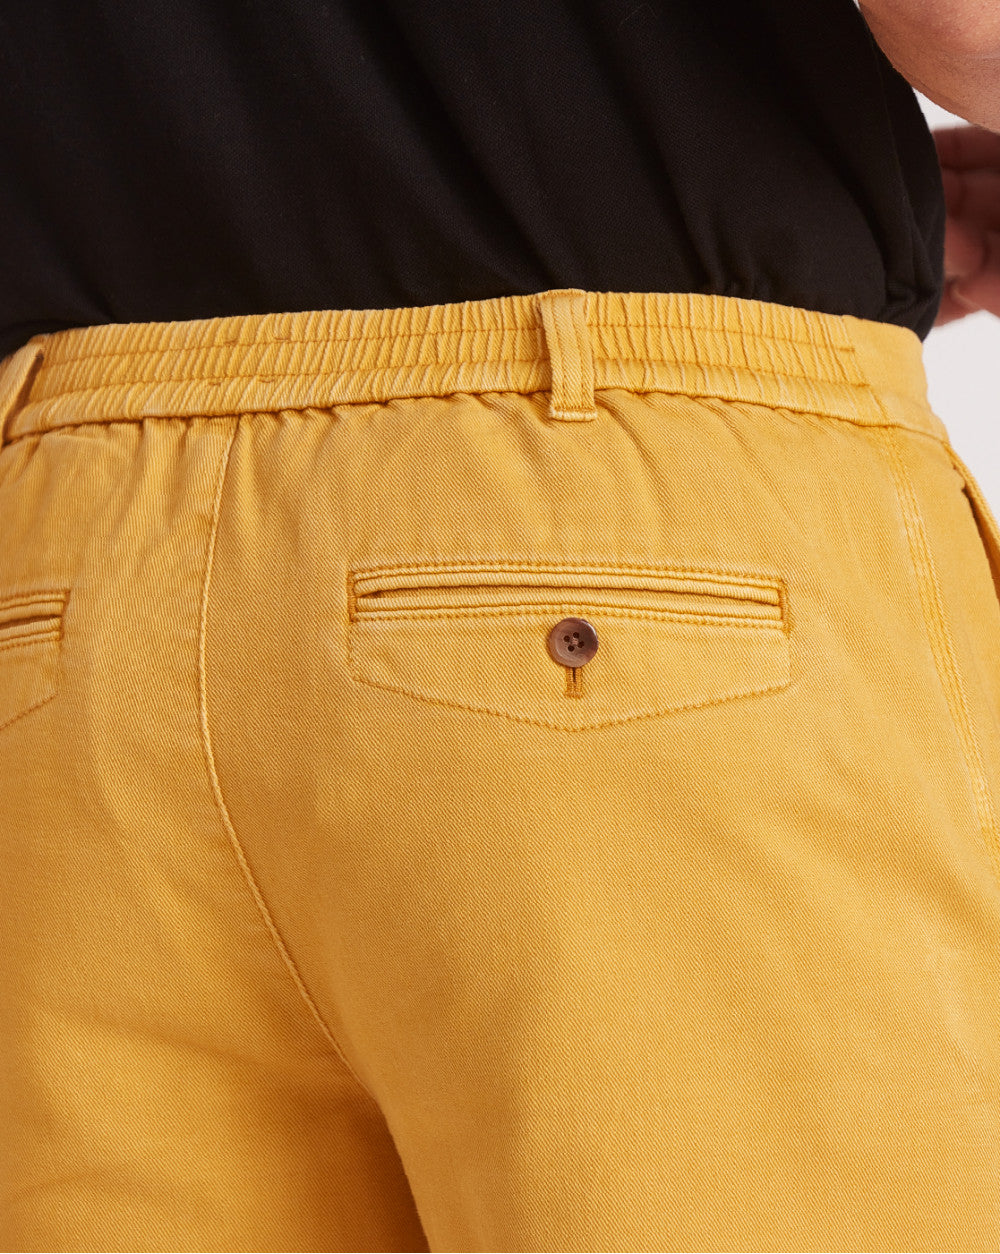 Garment Dyed Elasticized Shorts - Golden Yellow